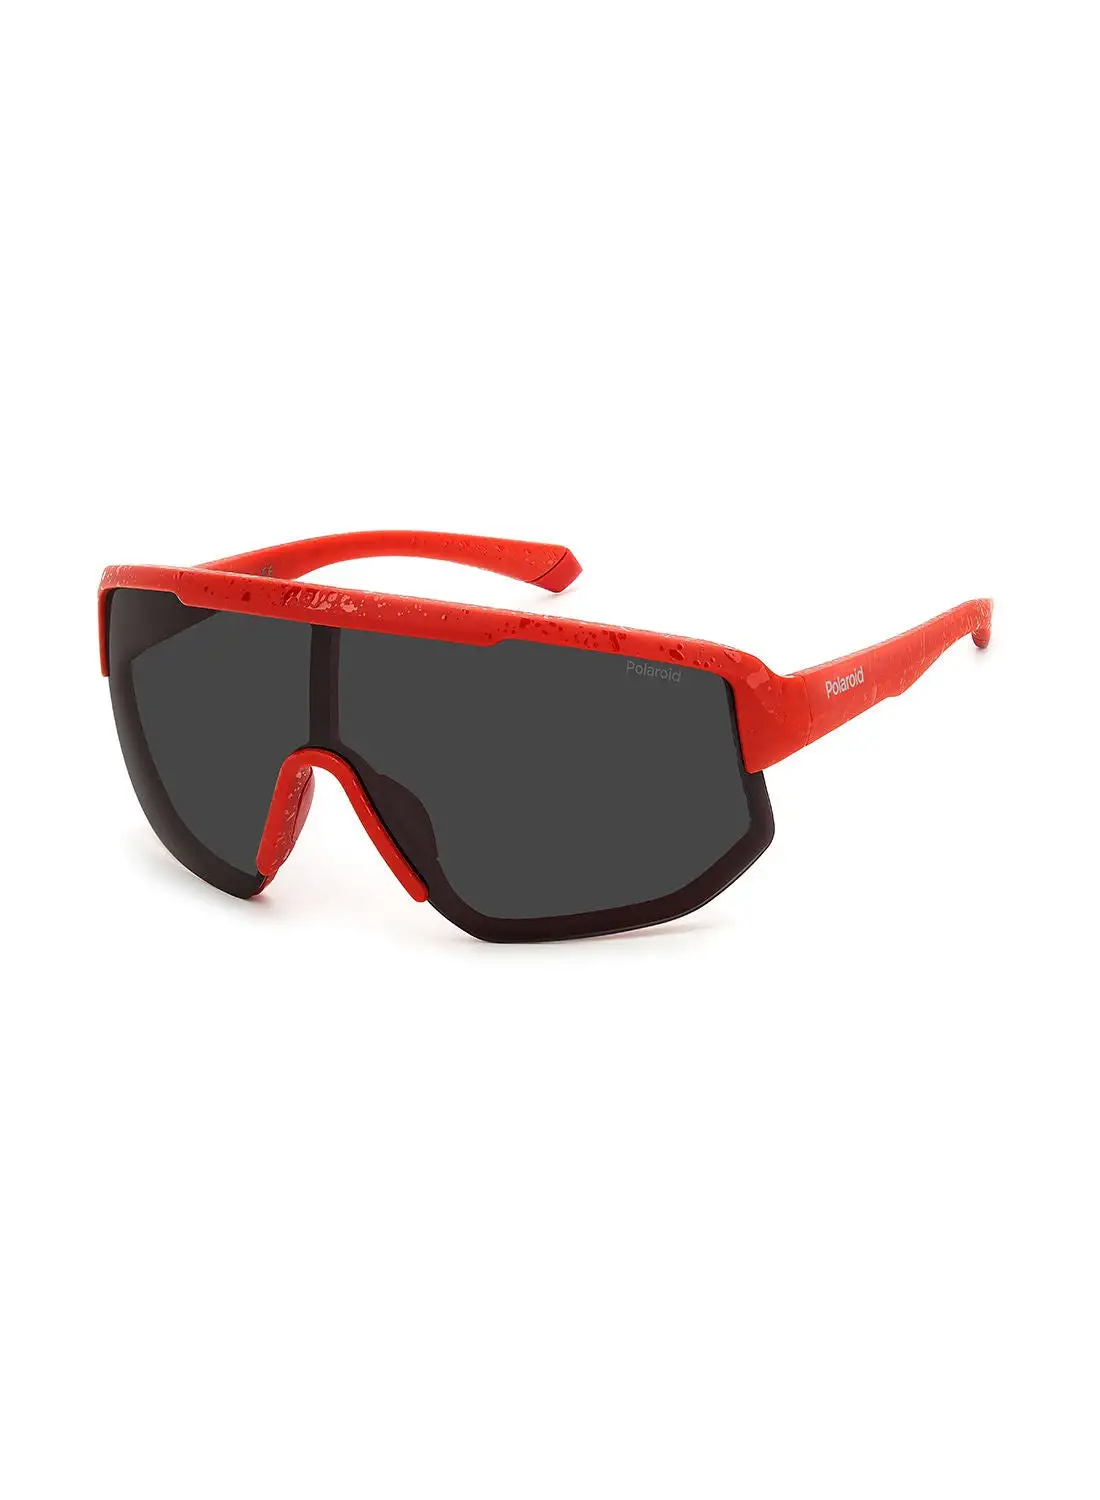 Polaroid Unisex UV Protection Sunglasses - Pld 7047/S Matte Red 99 - Lens Size: 99 Mm